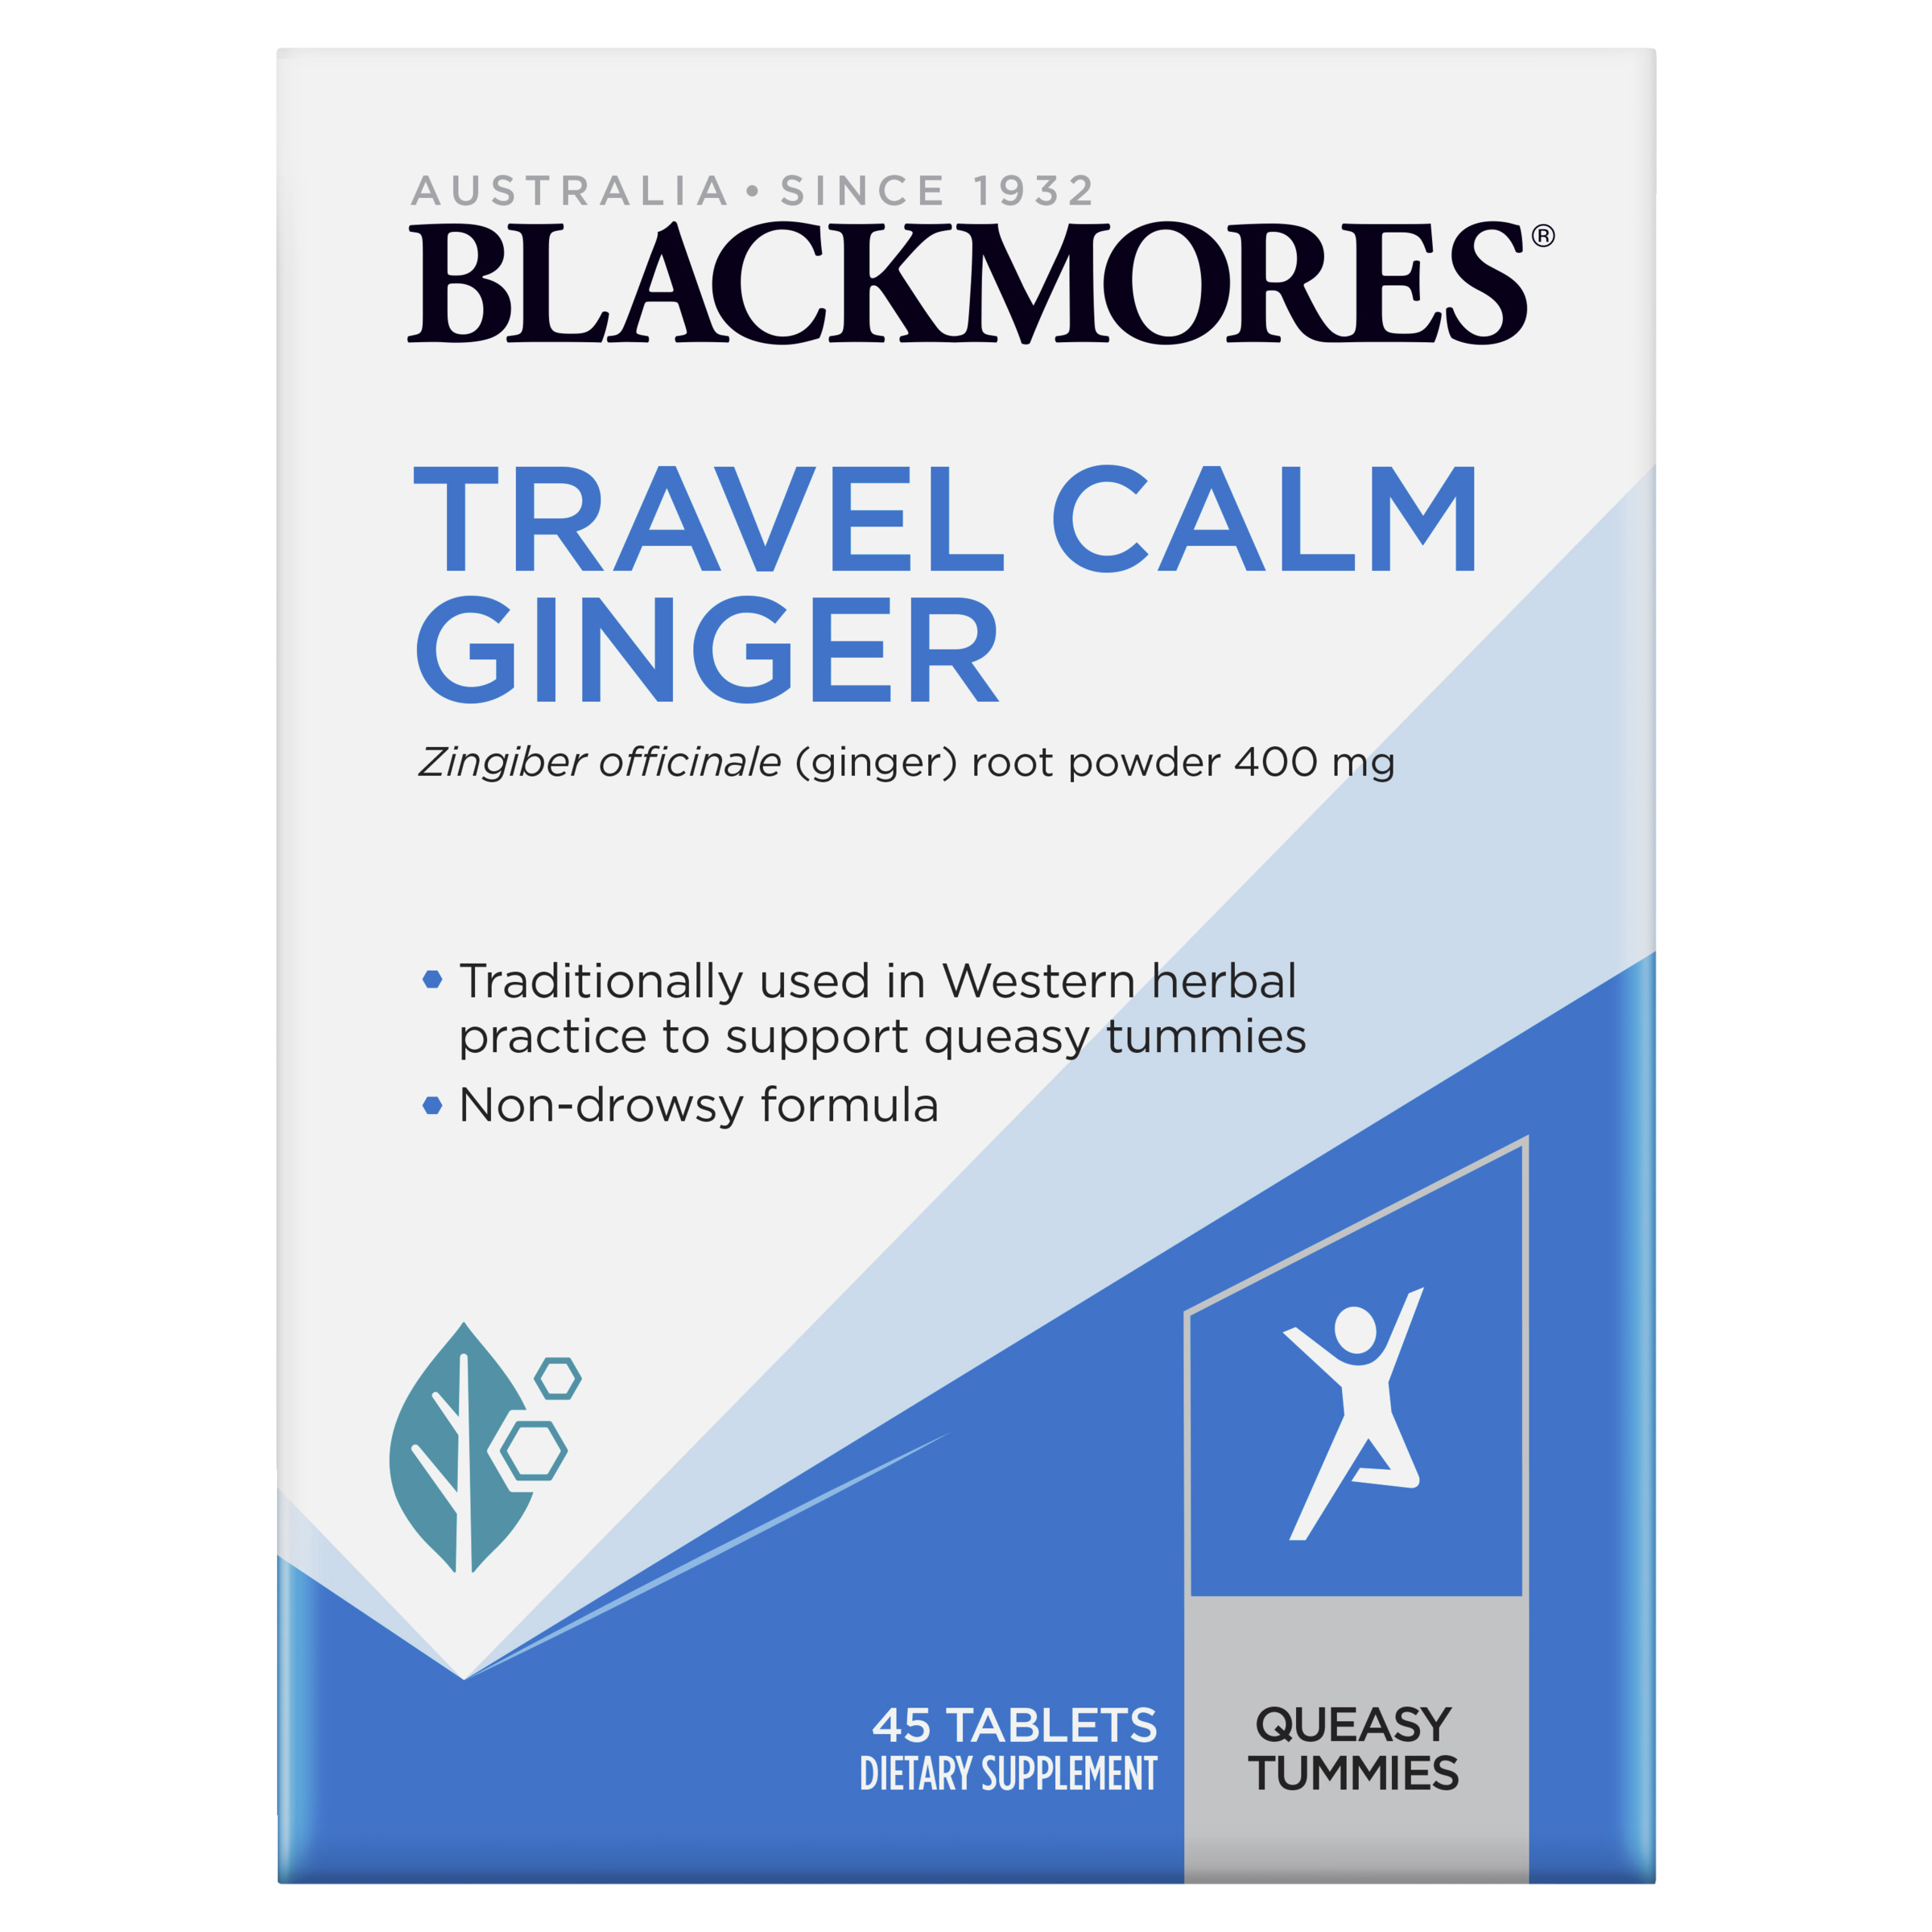 Blackmores Travel Calm Ginger